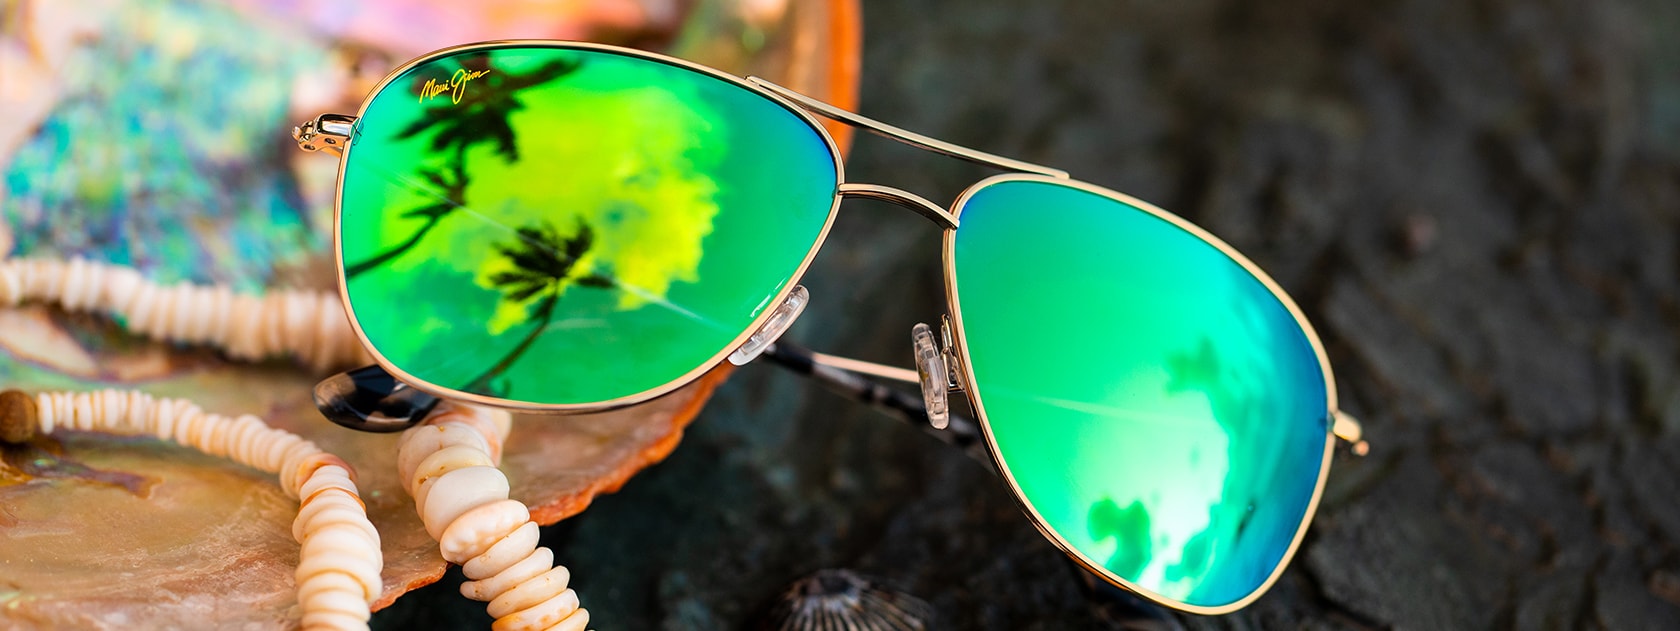 Where Are Maui Jim Sunglasses Made